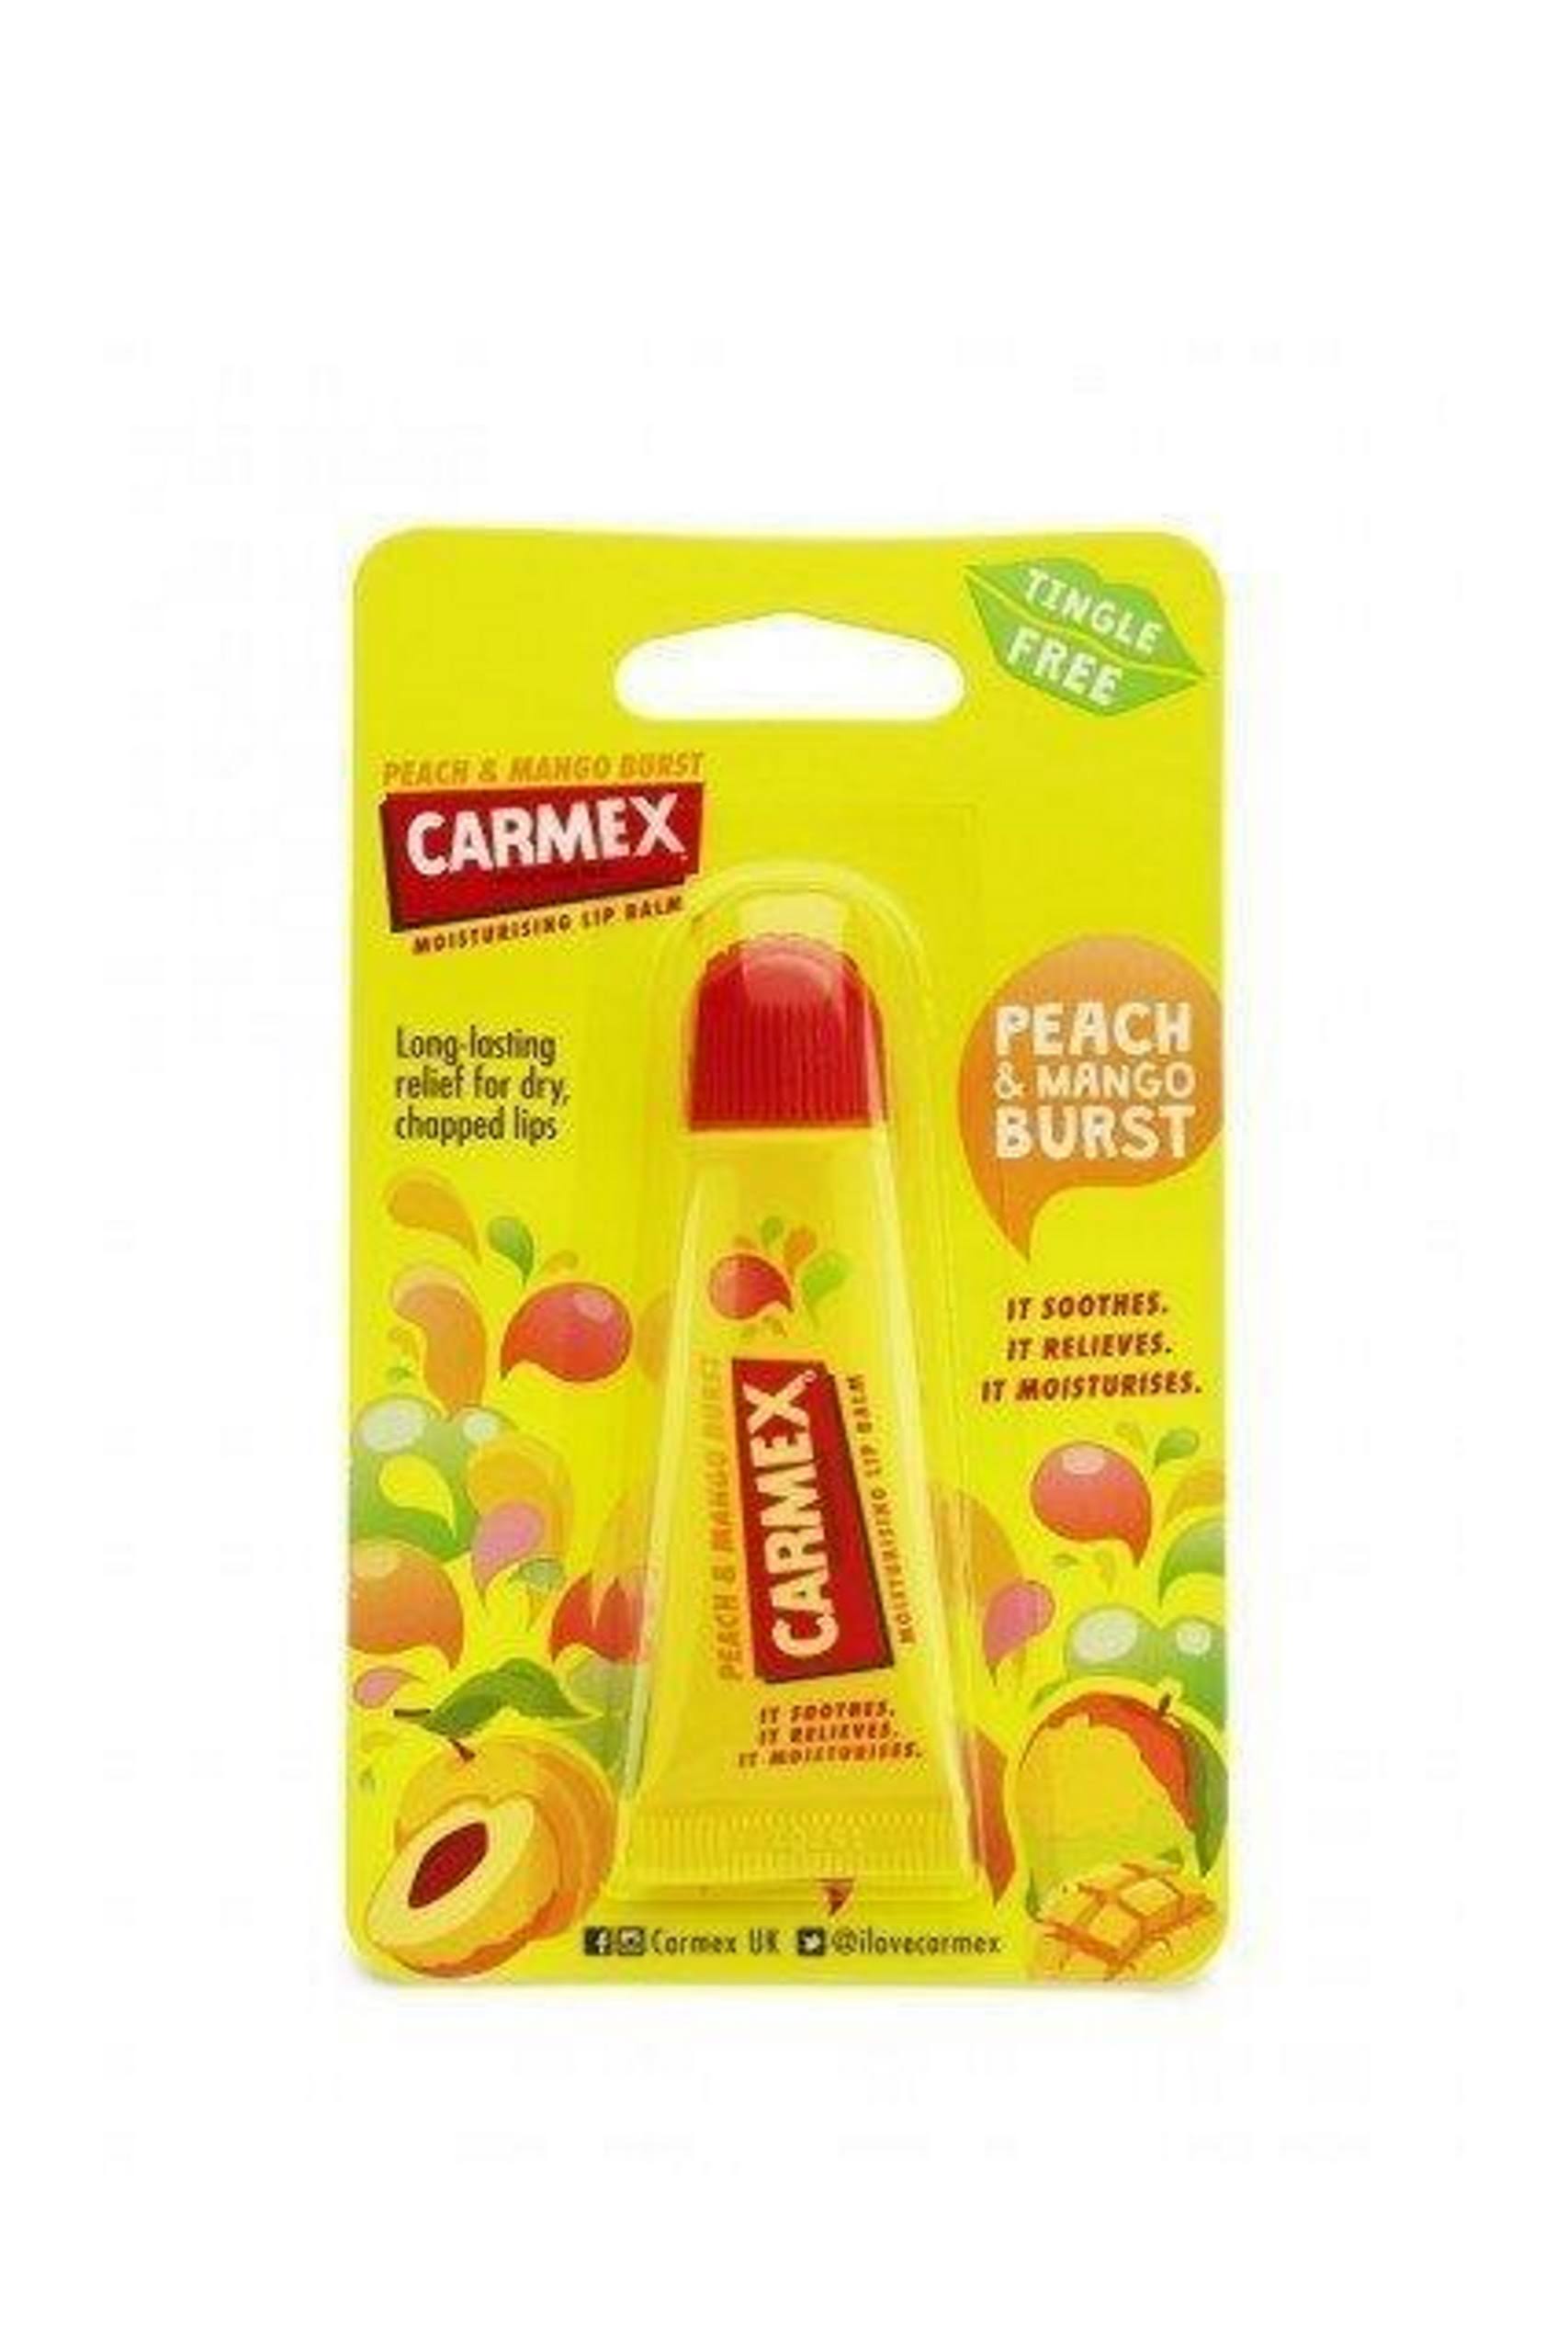 Carmex Peach and Mango Burst Moisturising Lip Balm - 10g